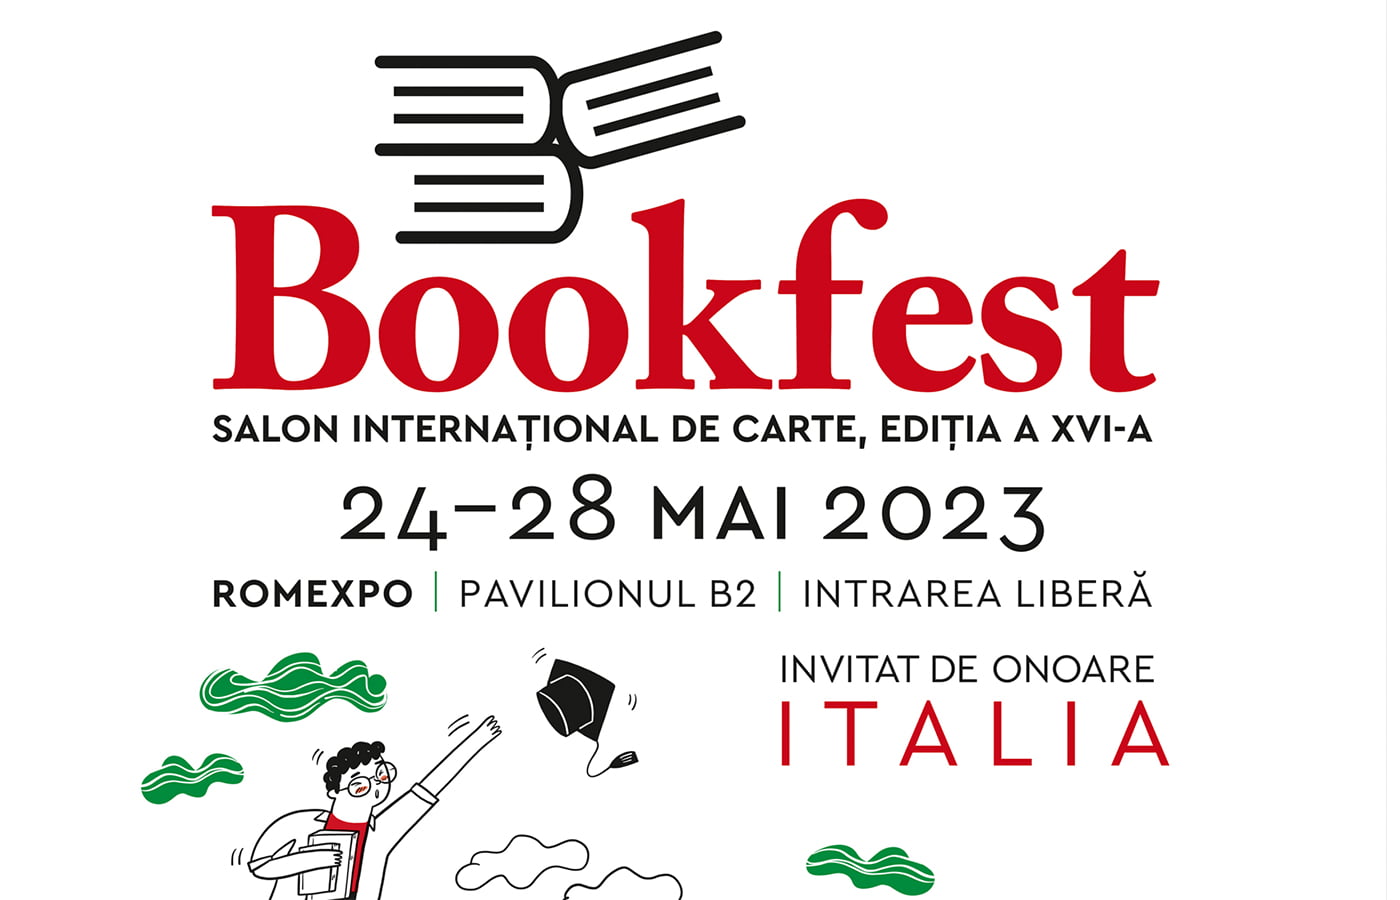 bookfest 2023